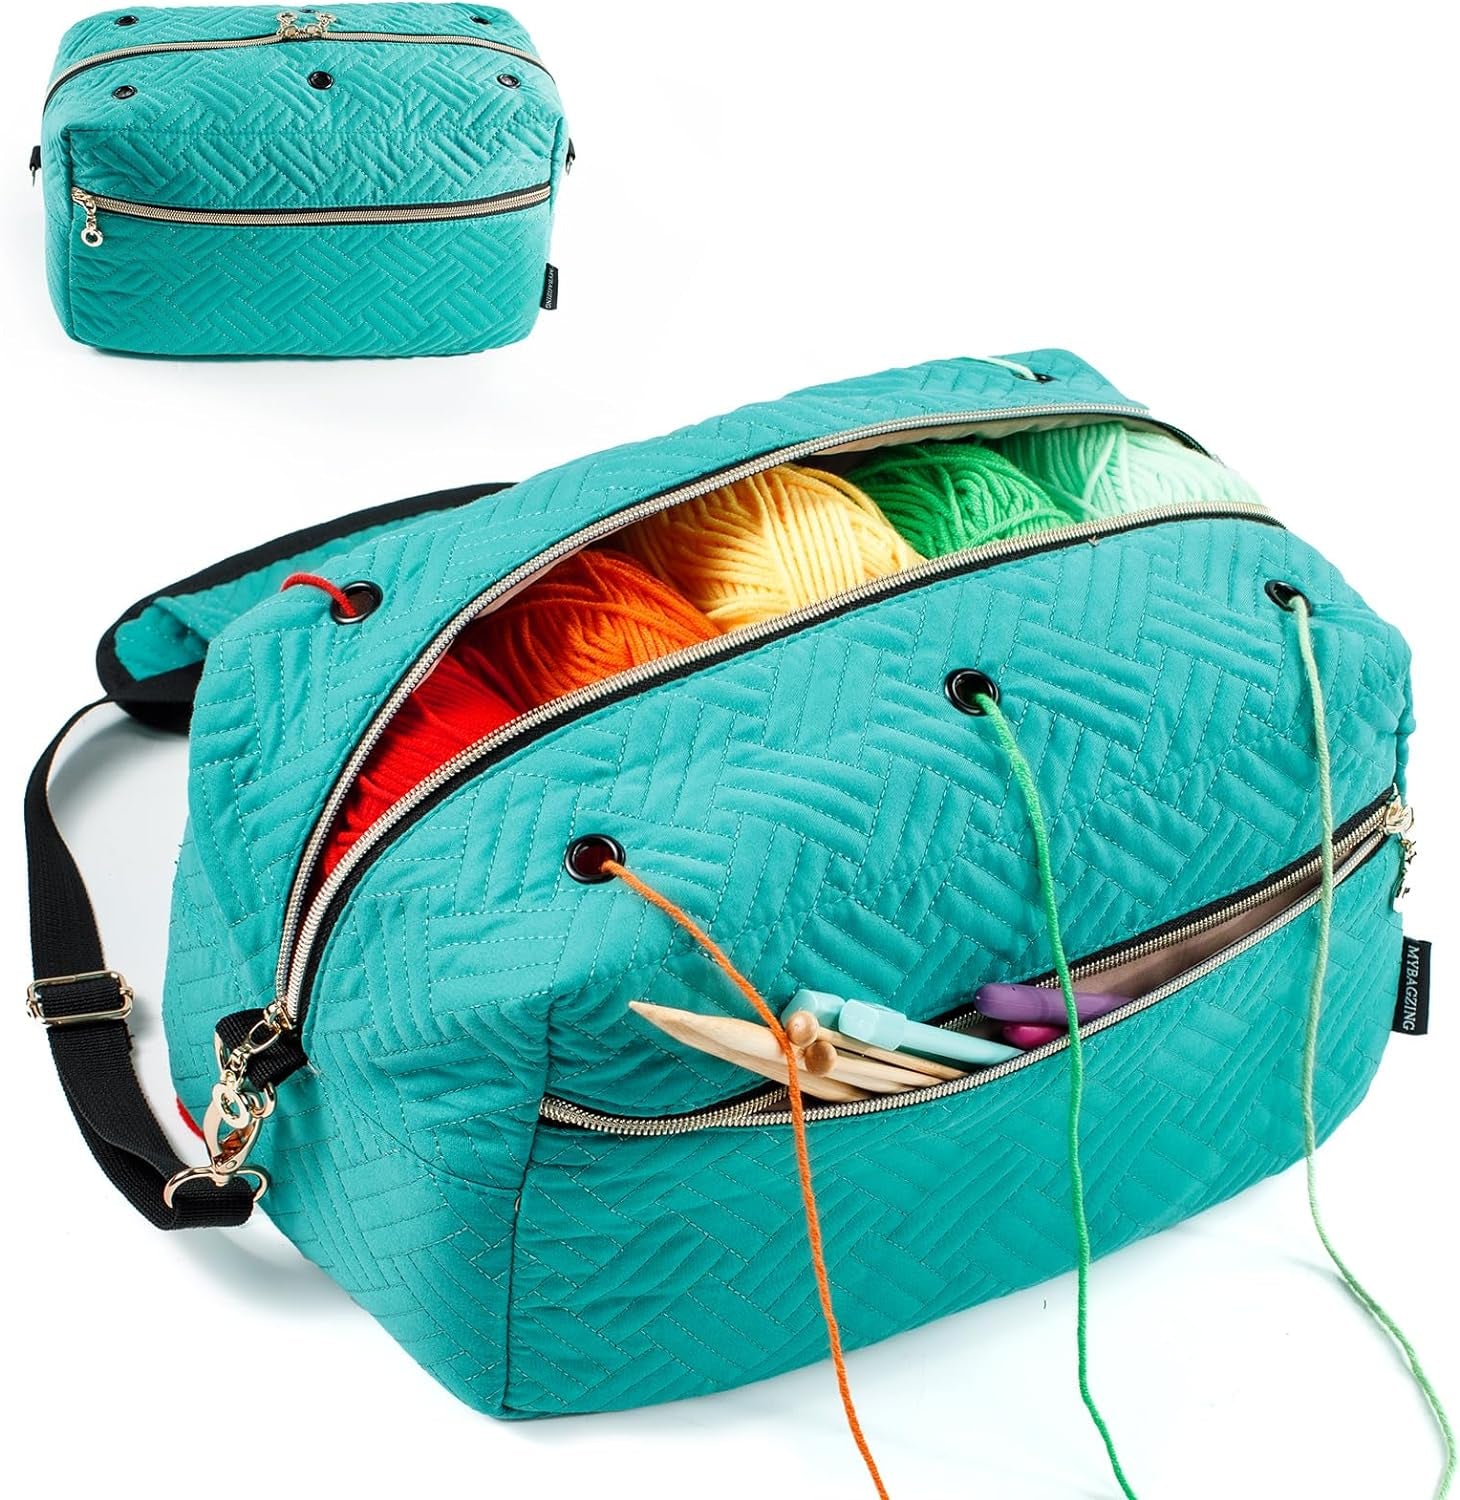 Crochet Bag Organizer - Knitting Bag - Yarn Storage Organizer - Yarn Bag for Crocheting - Yarn Holder for Crochet Accessories, Knitting Needles, Crochet Hooks, Crocheting & Knitting Gifts